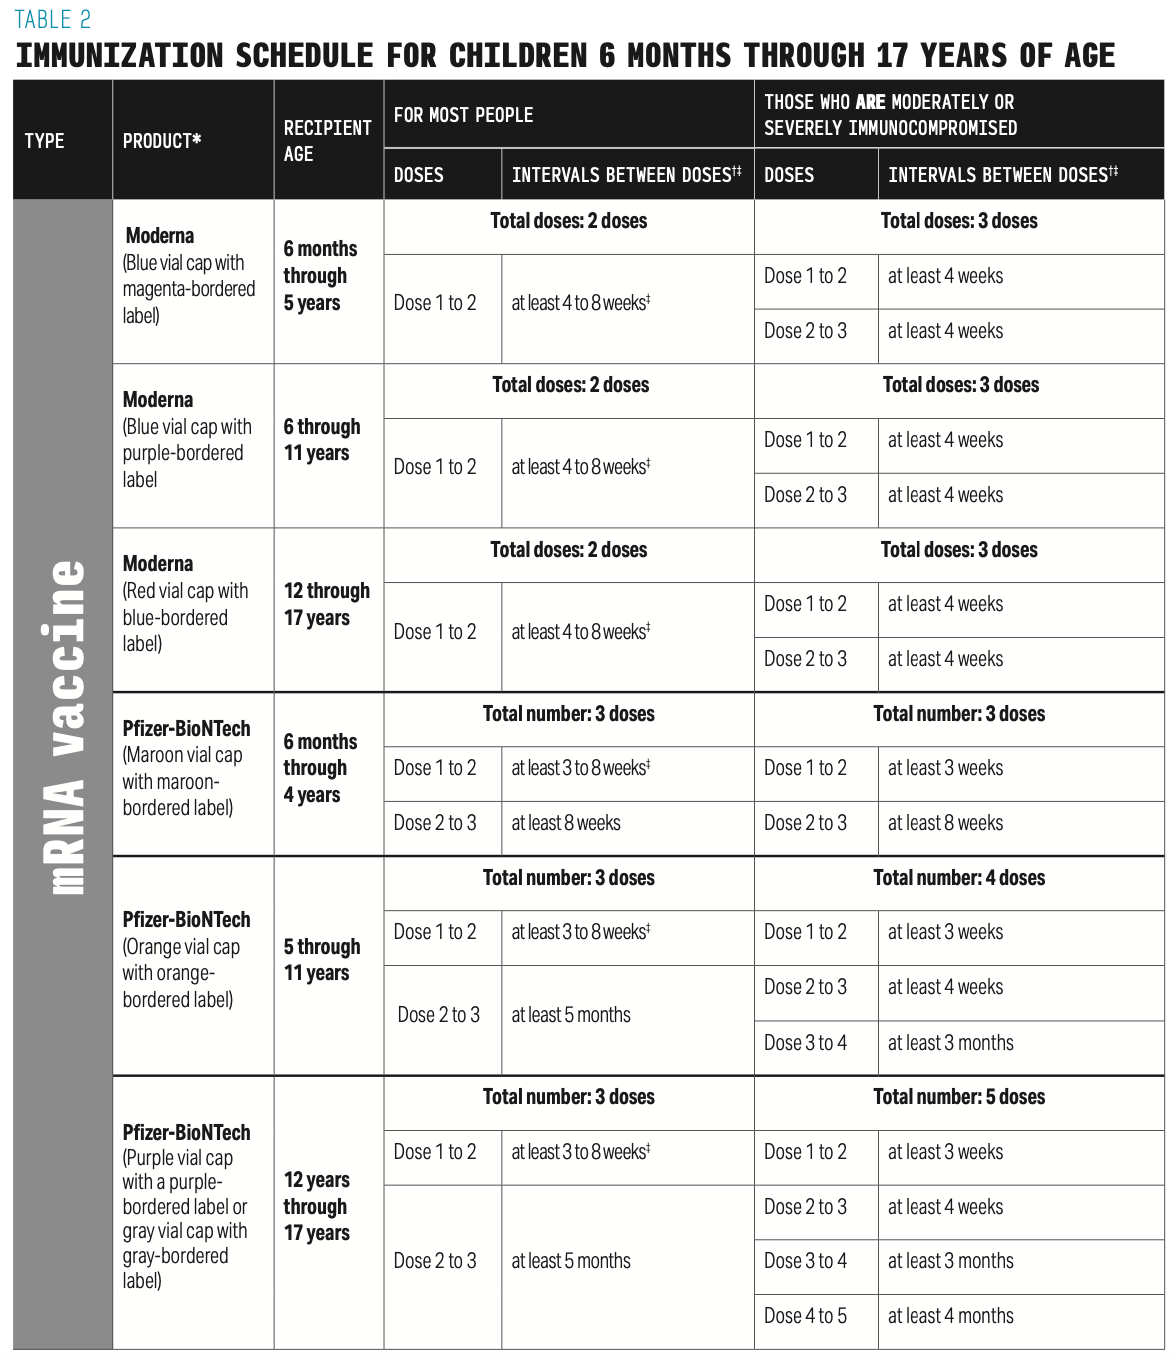 Table 2 - Immunization Schedule for Children 6 Months Through 17 Years of Age